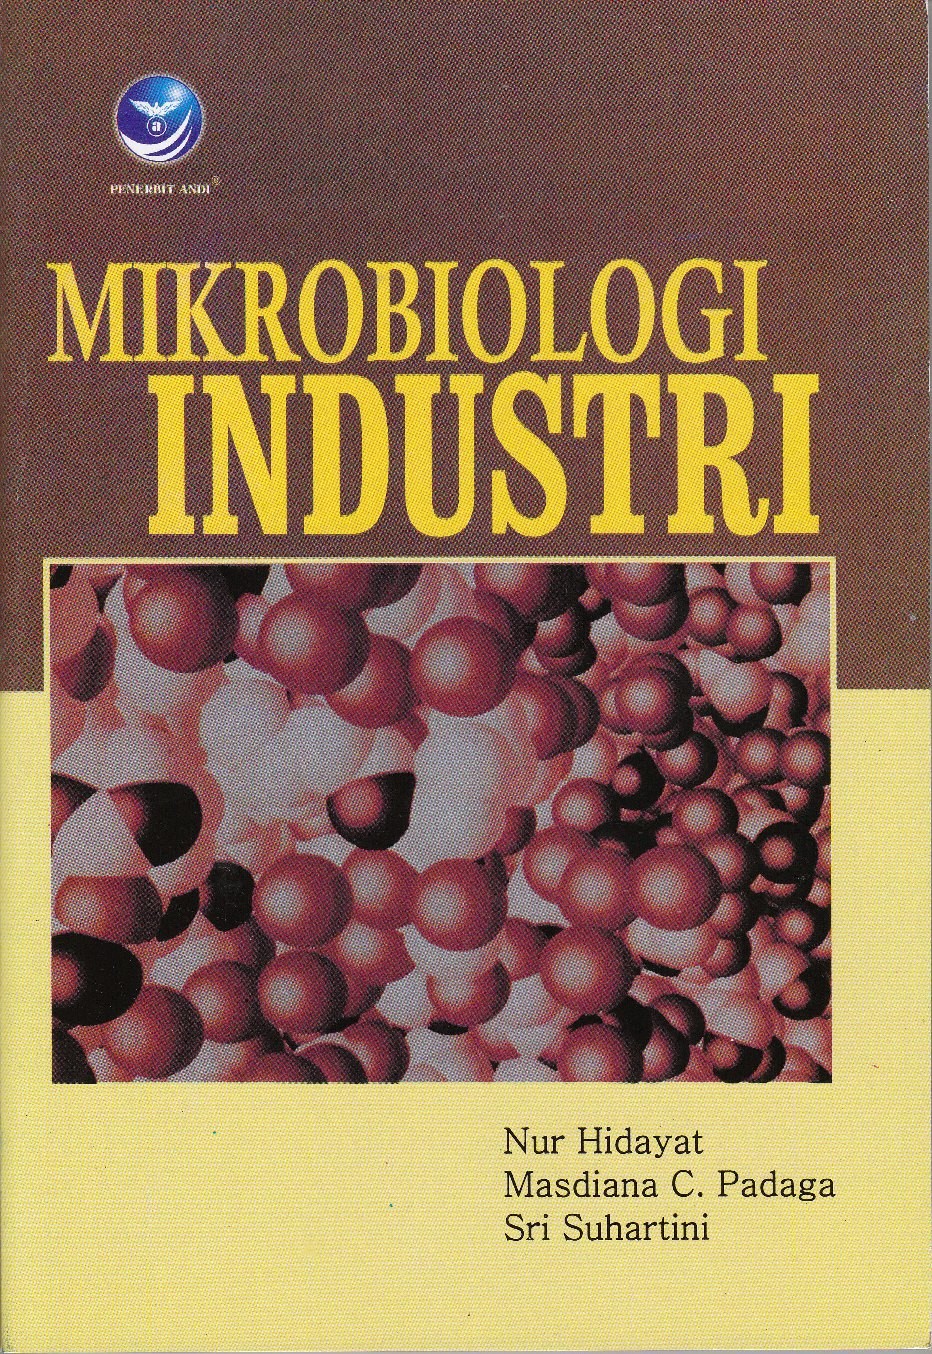 jurnal mikrobiologi industri